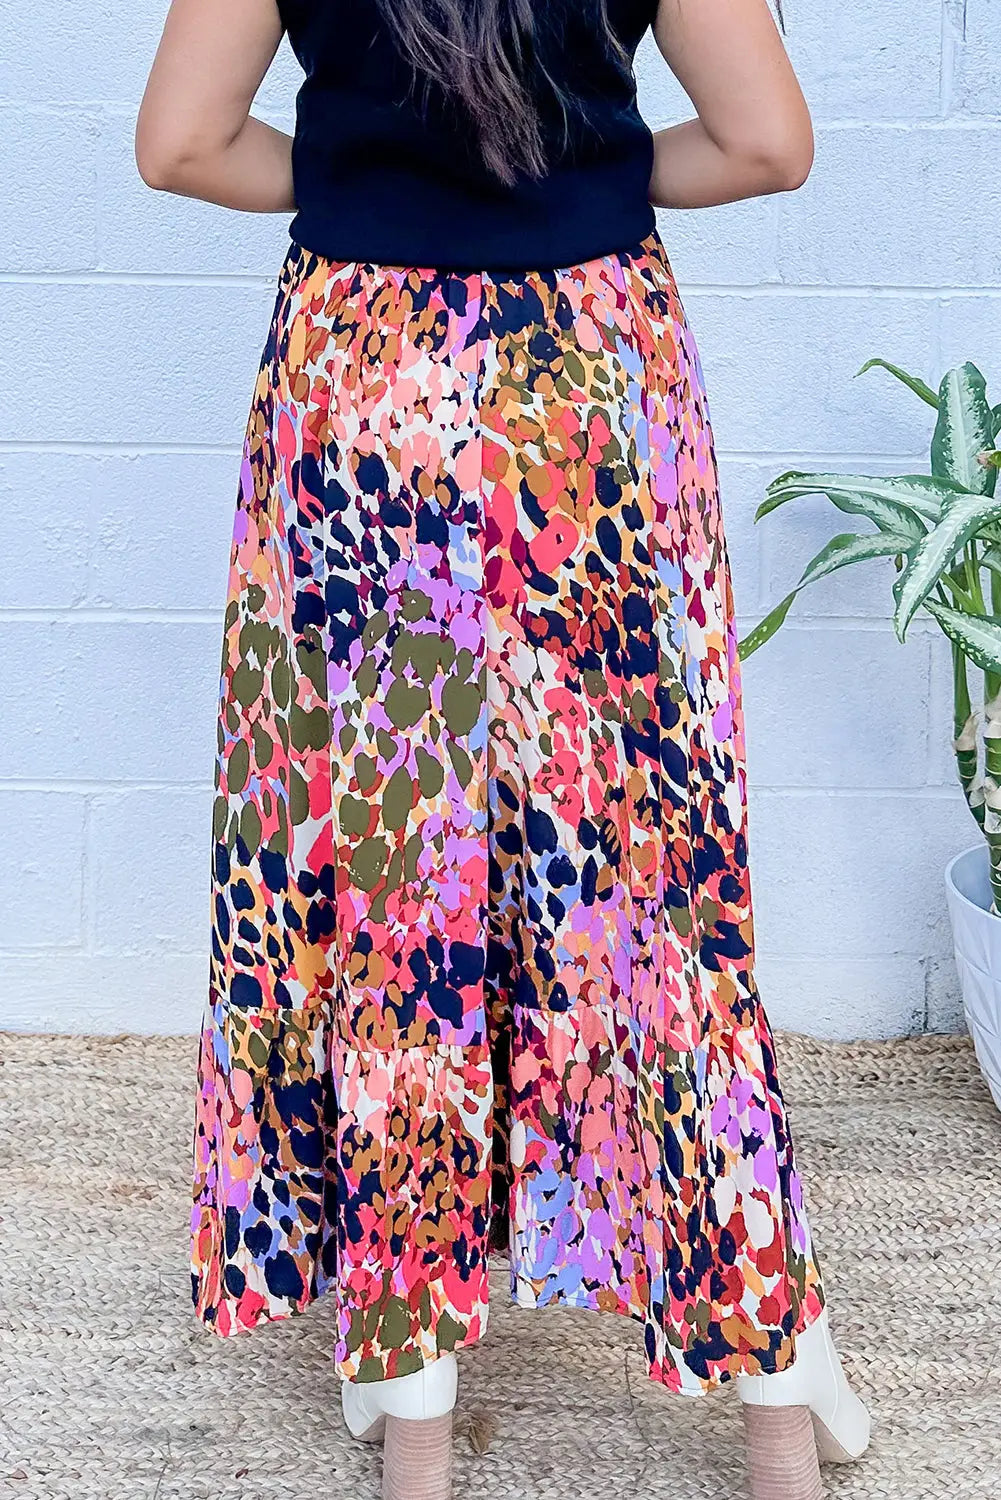 Abstract floral ruffled maxi skirt - skirts